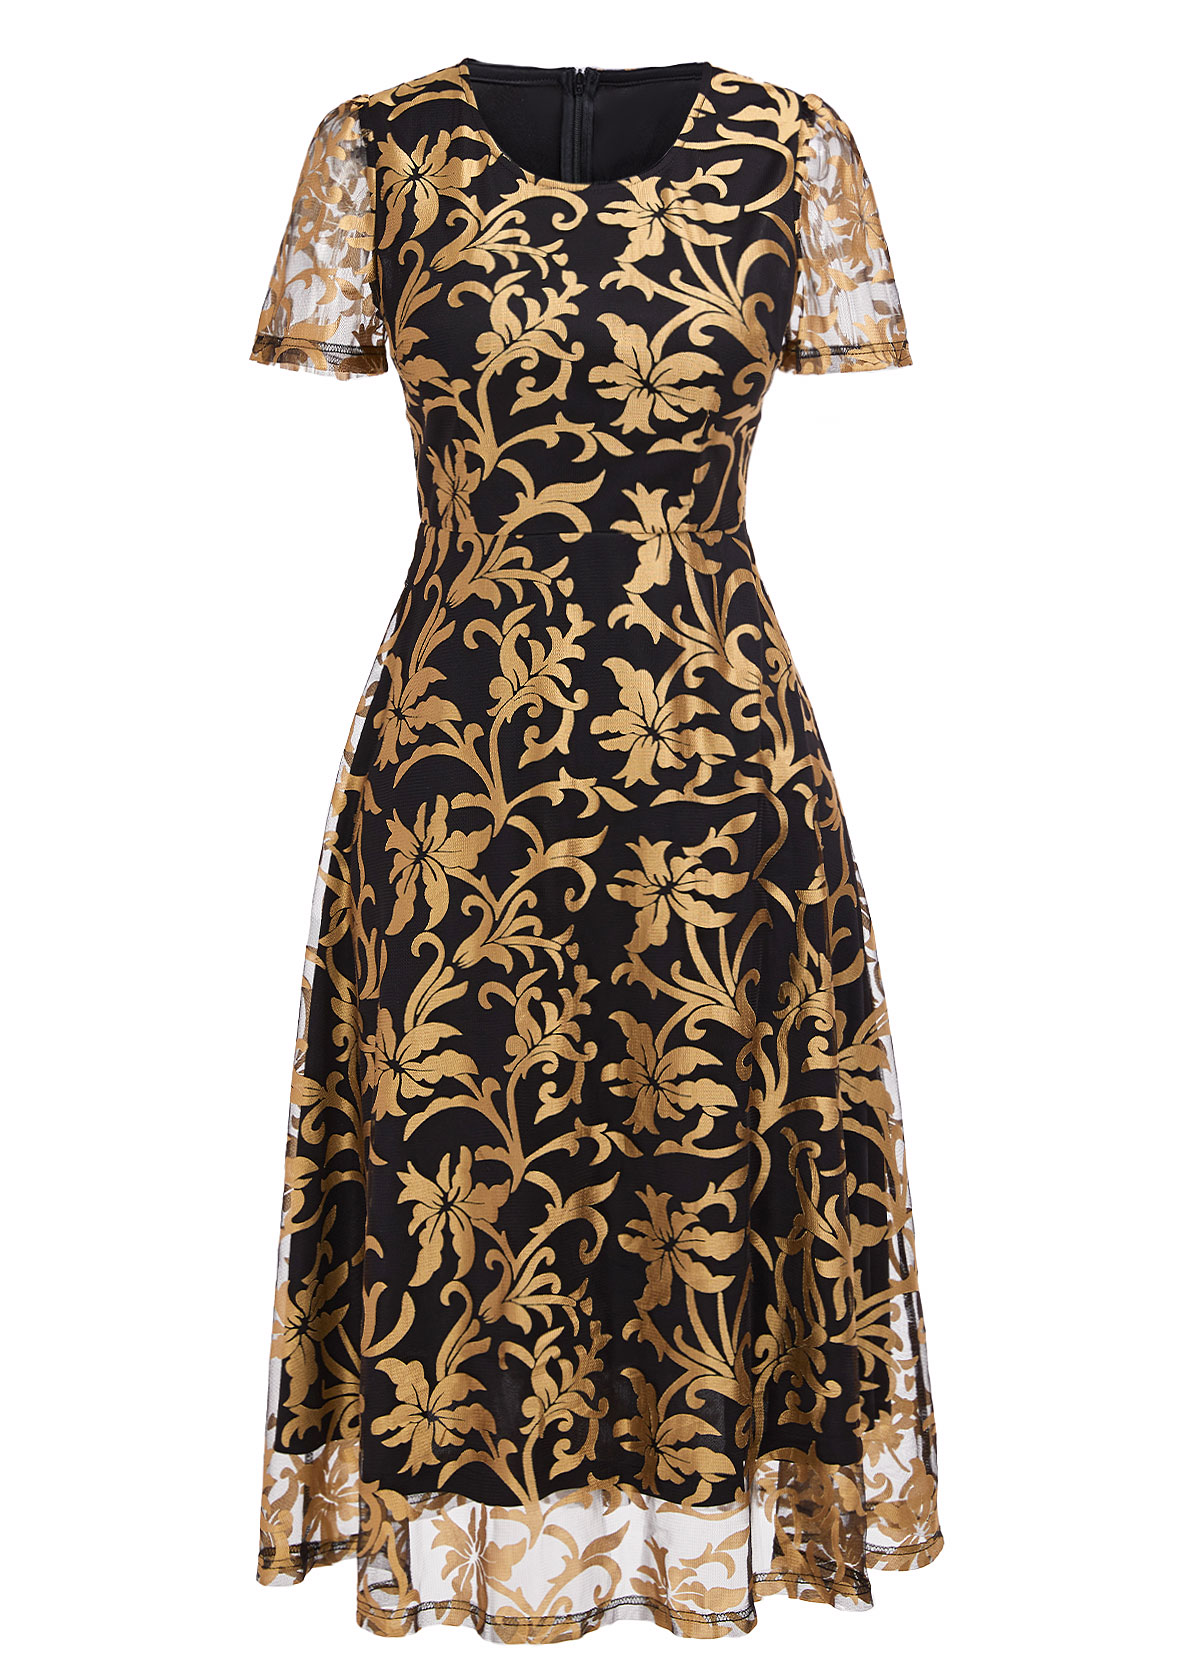 Floral Print Layered Golden Short Sleeve Round Neck Dress